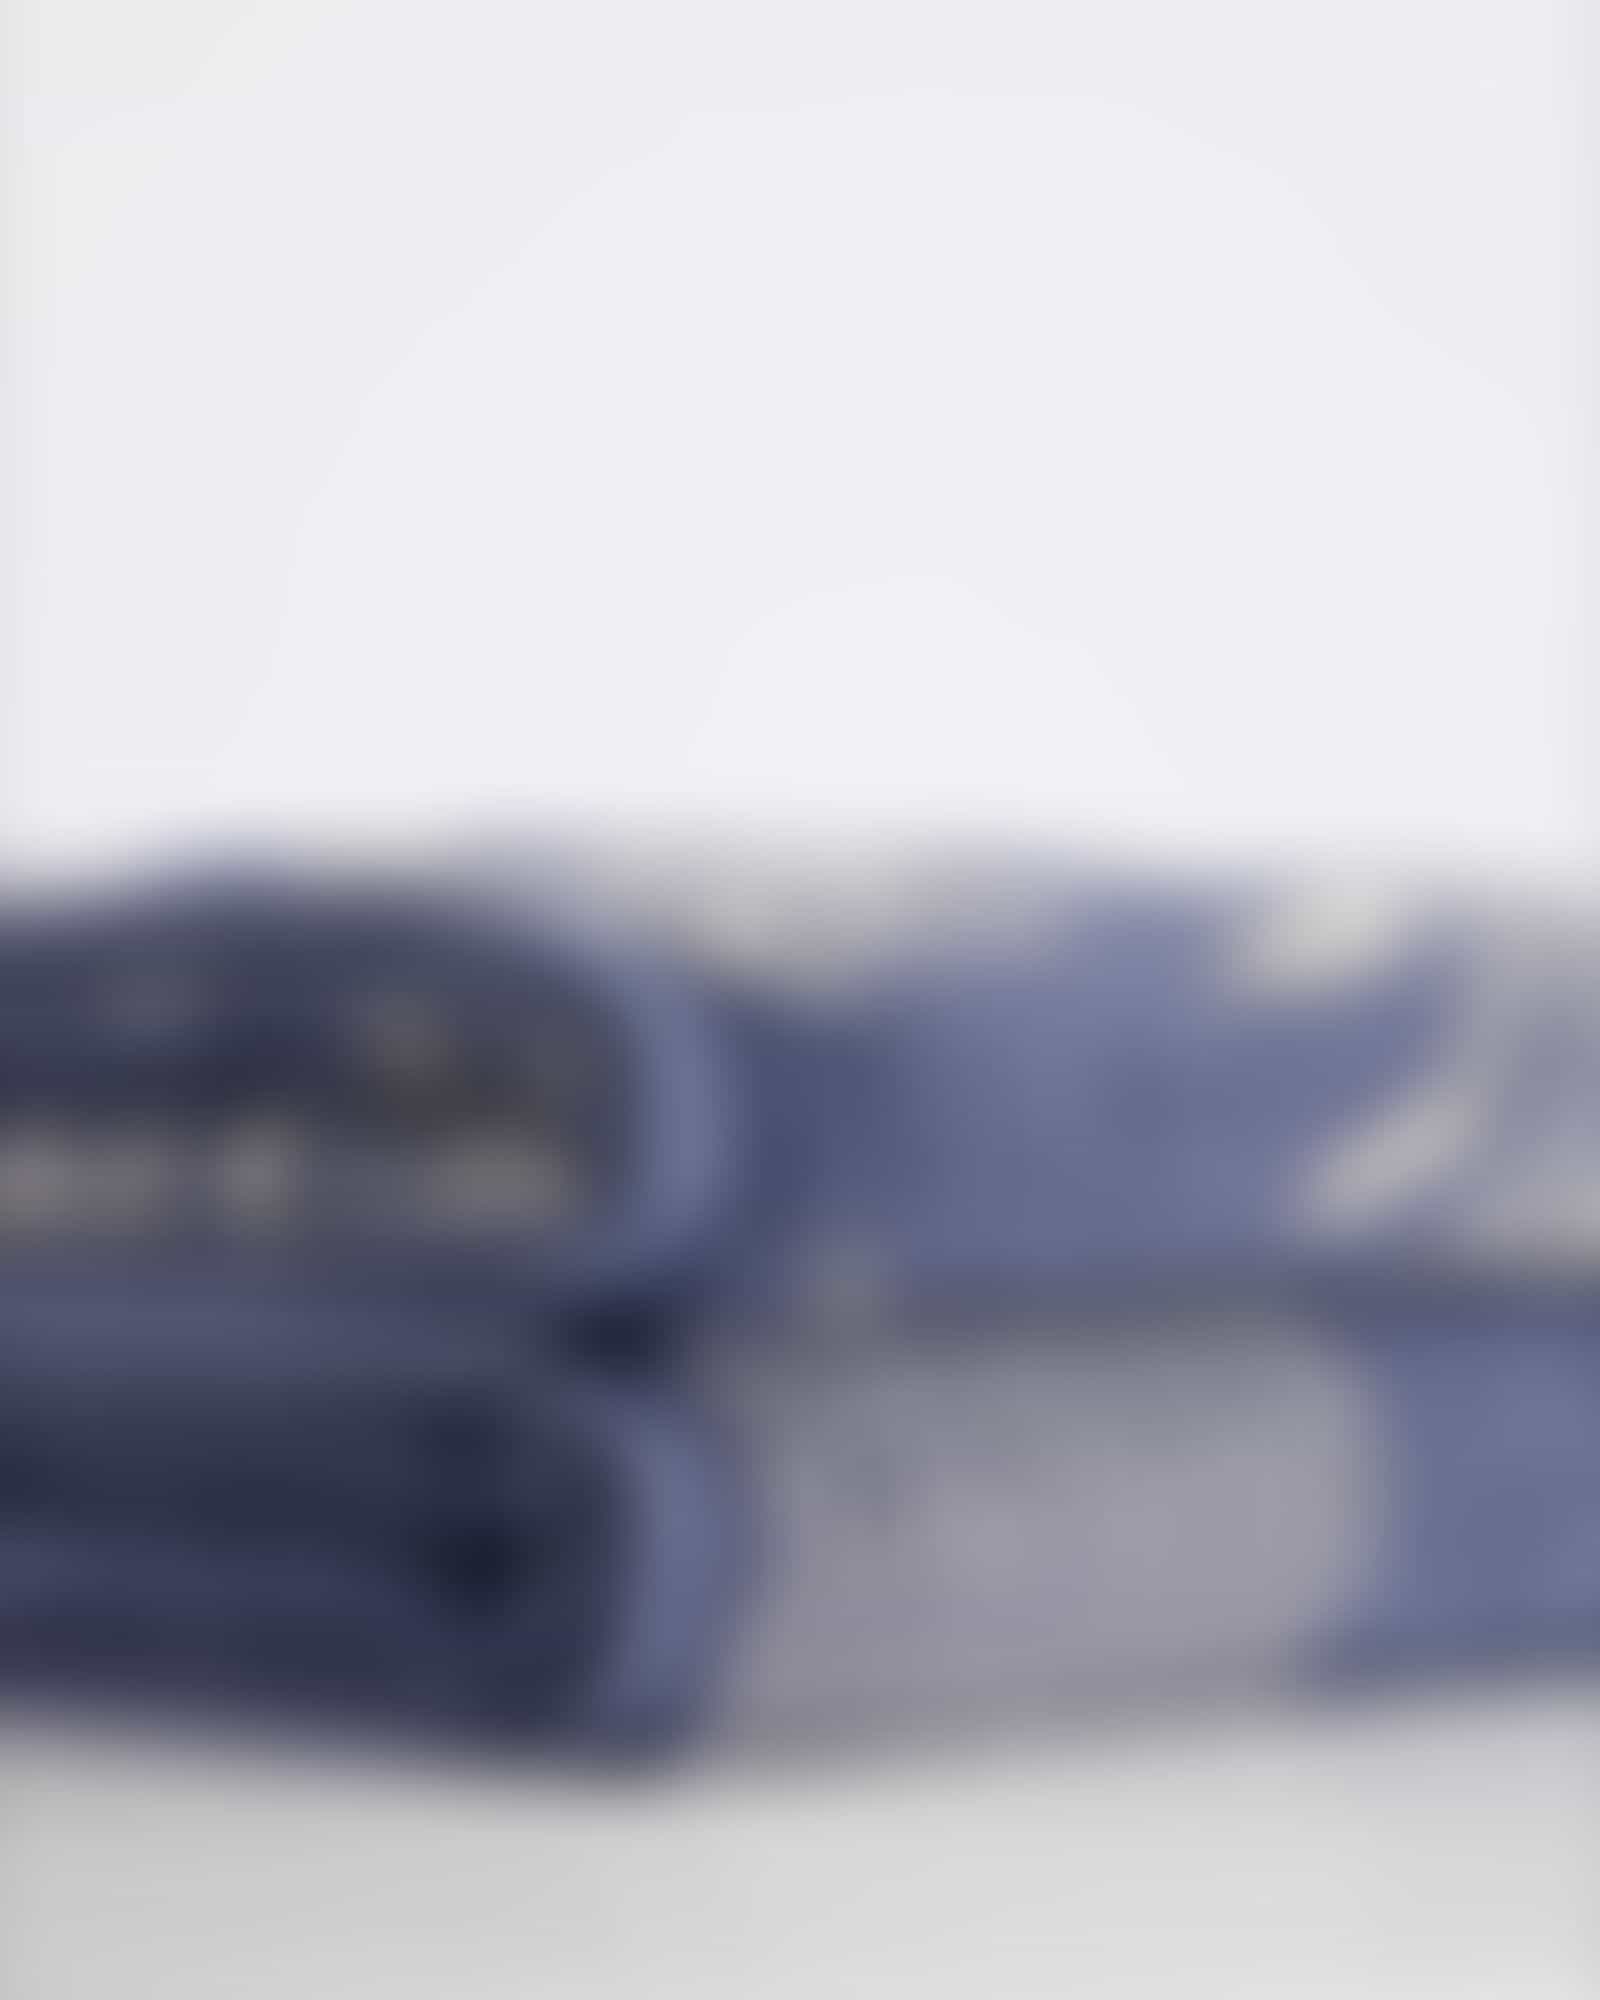 Cawö Handtücher Luxury Home Two-Tone Edition Floral 638 - Farbe: nachtblau - 10 - Handtuch 50x100 cm